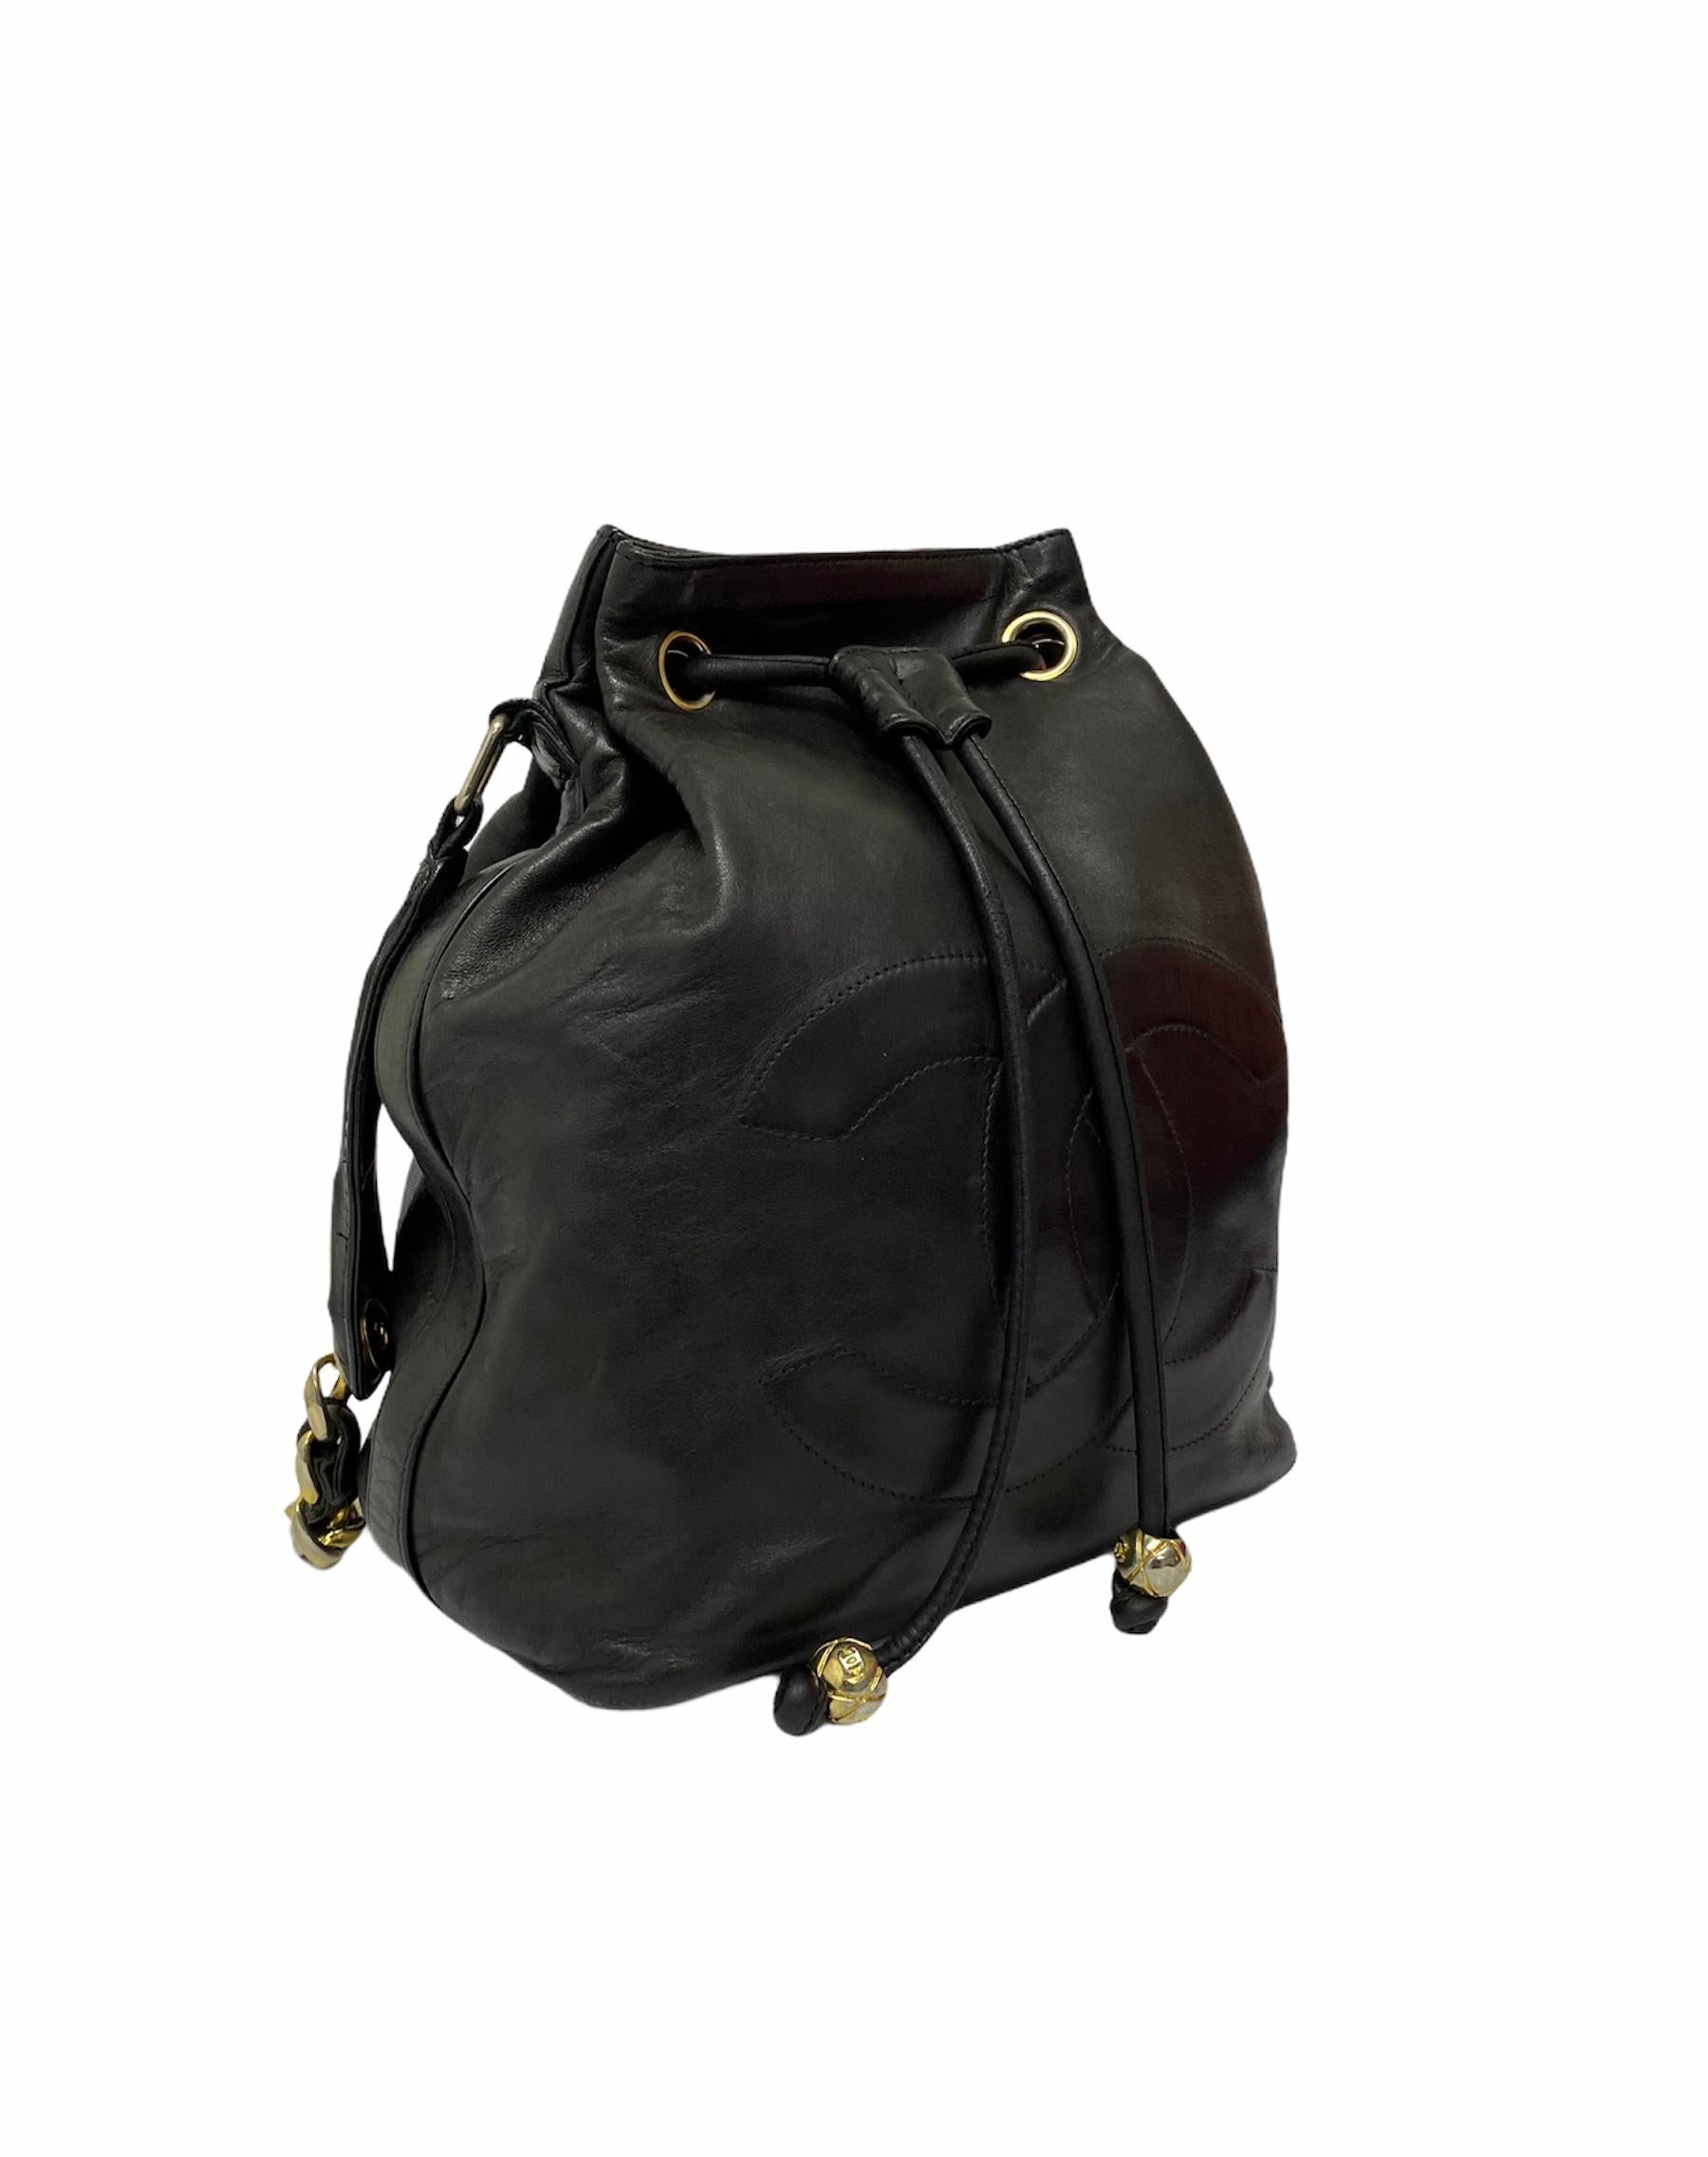 Chanel Vintage Bucket Bag in Black Leather with Golden Hardware 3